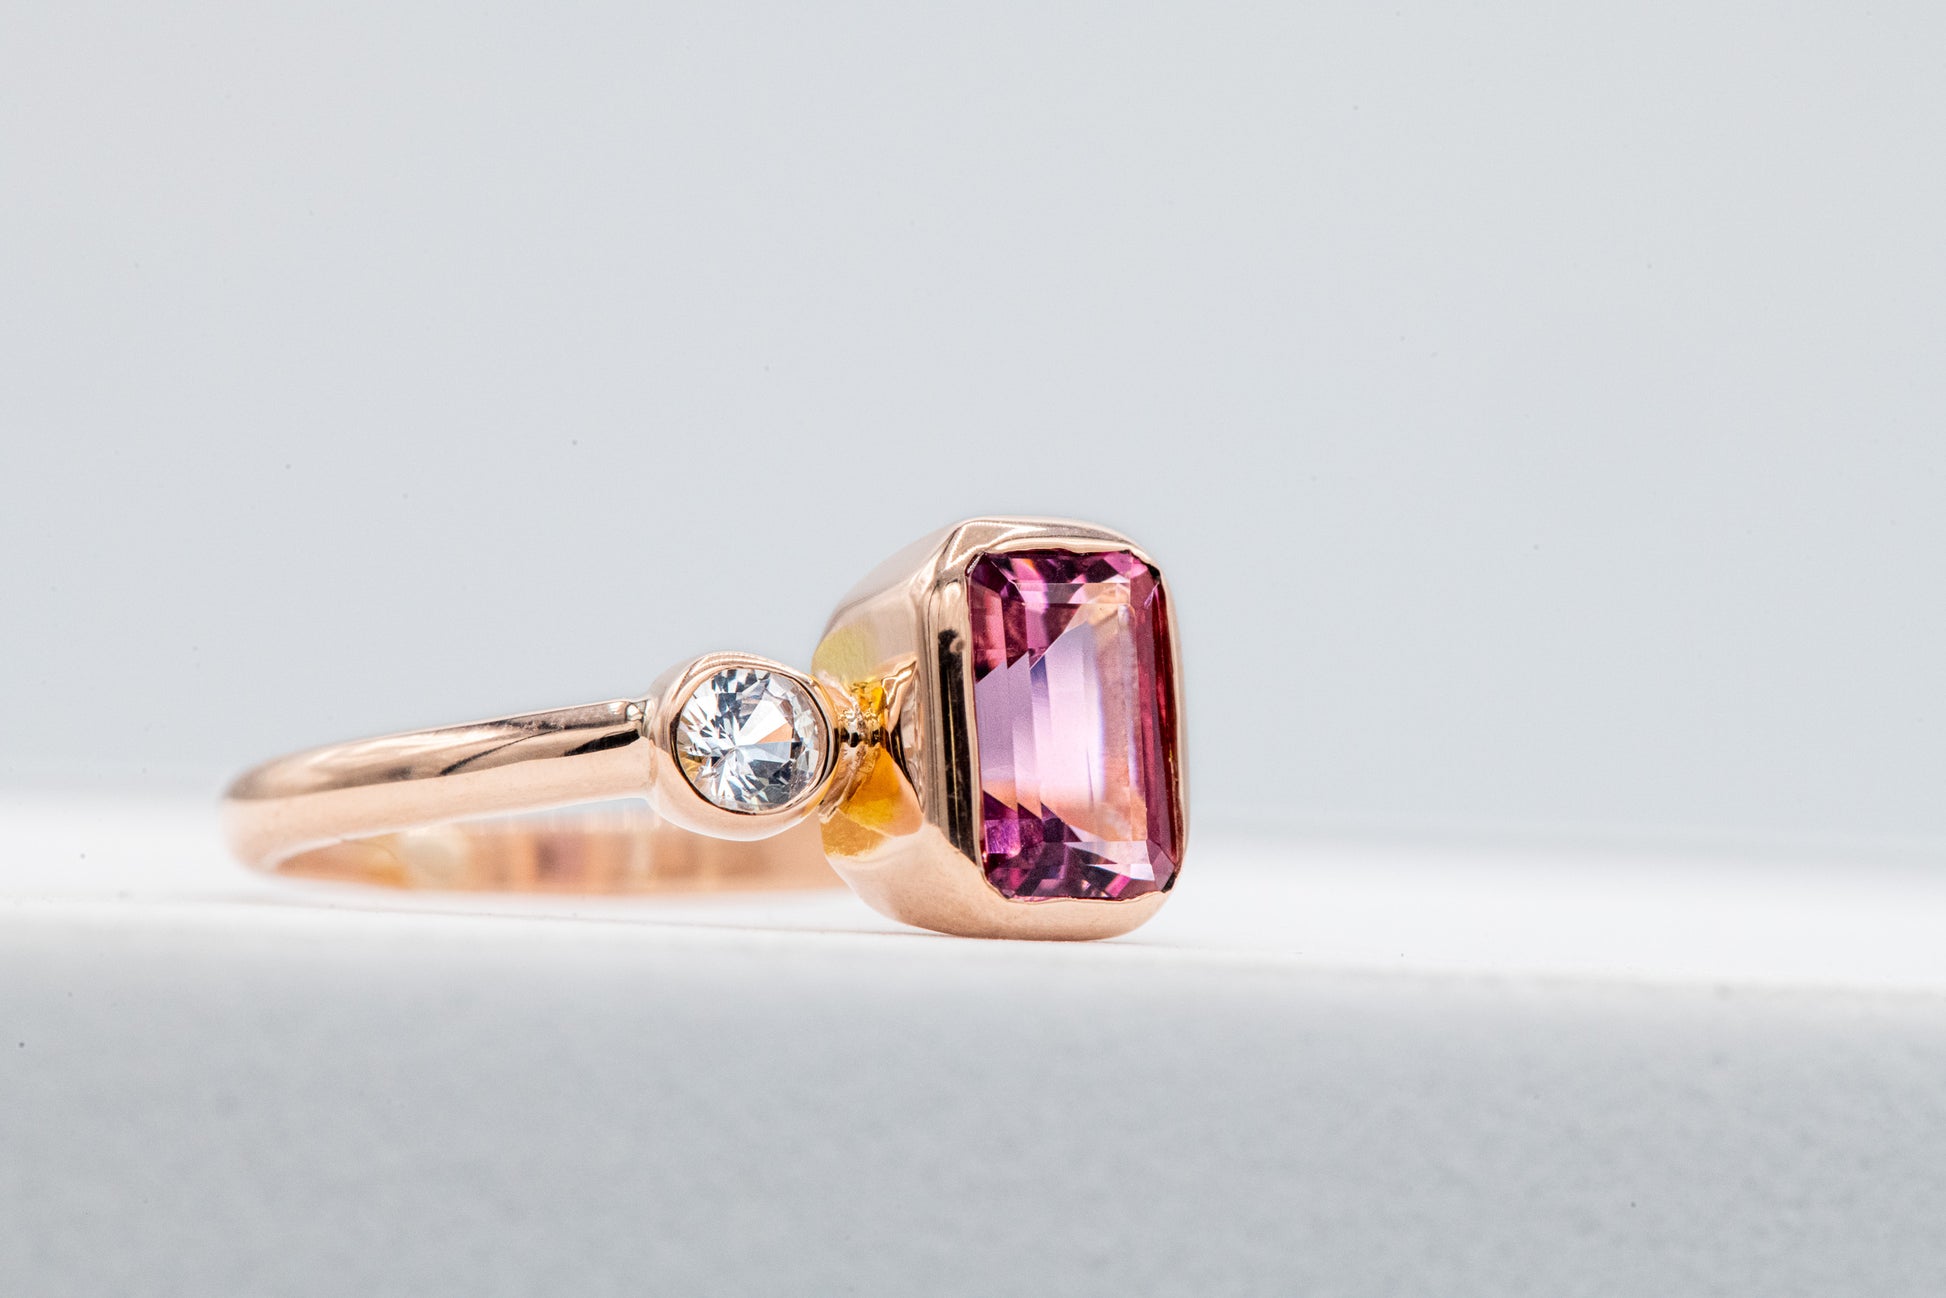 Pink Tourmaline Cassin jewelry.